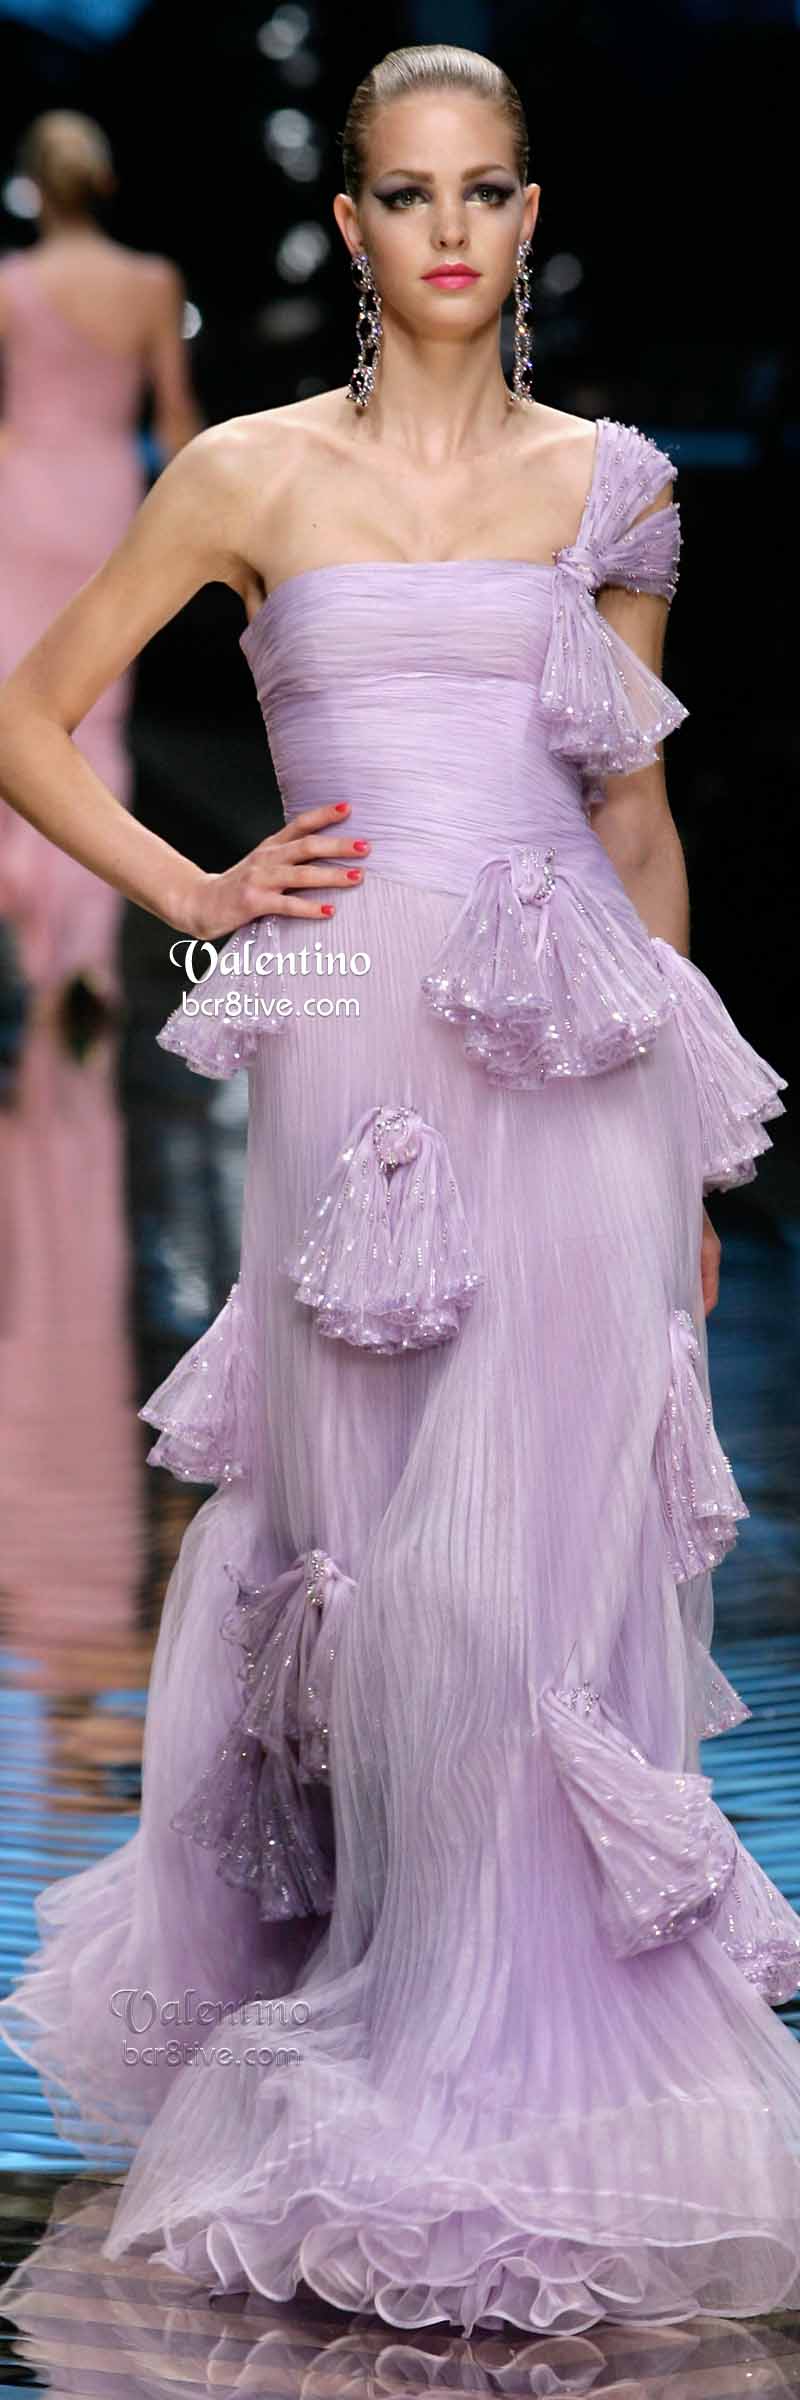 Valentino Creative Ruffled Lavender Gown 